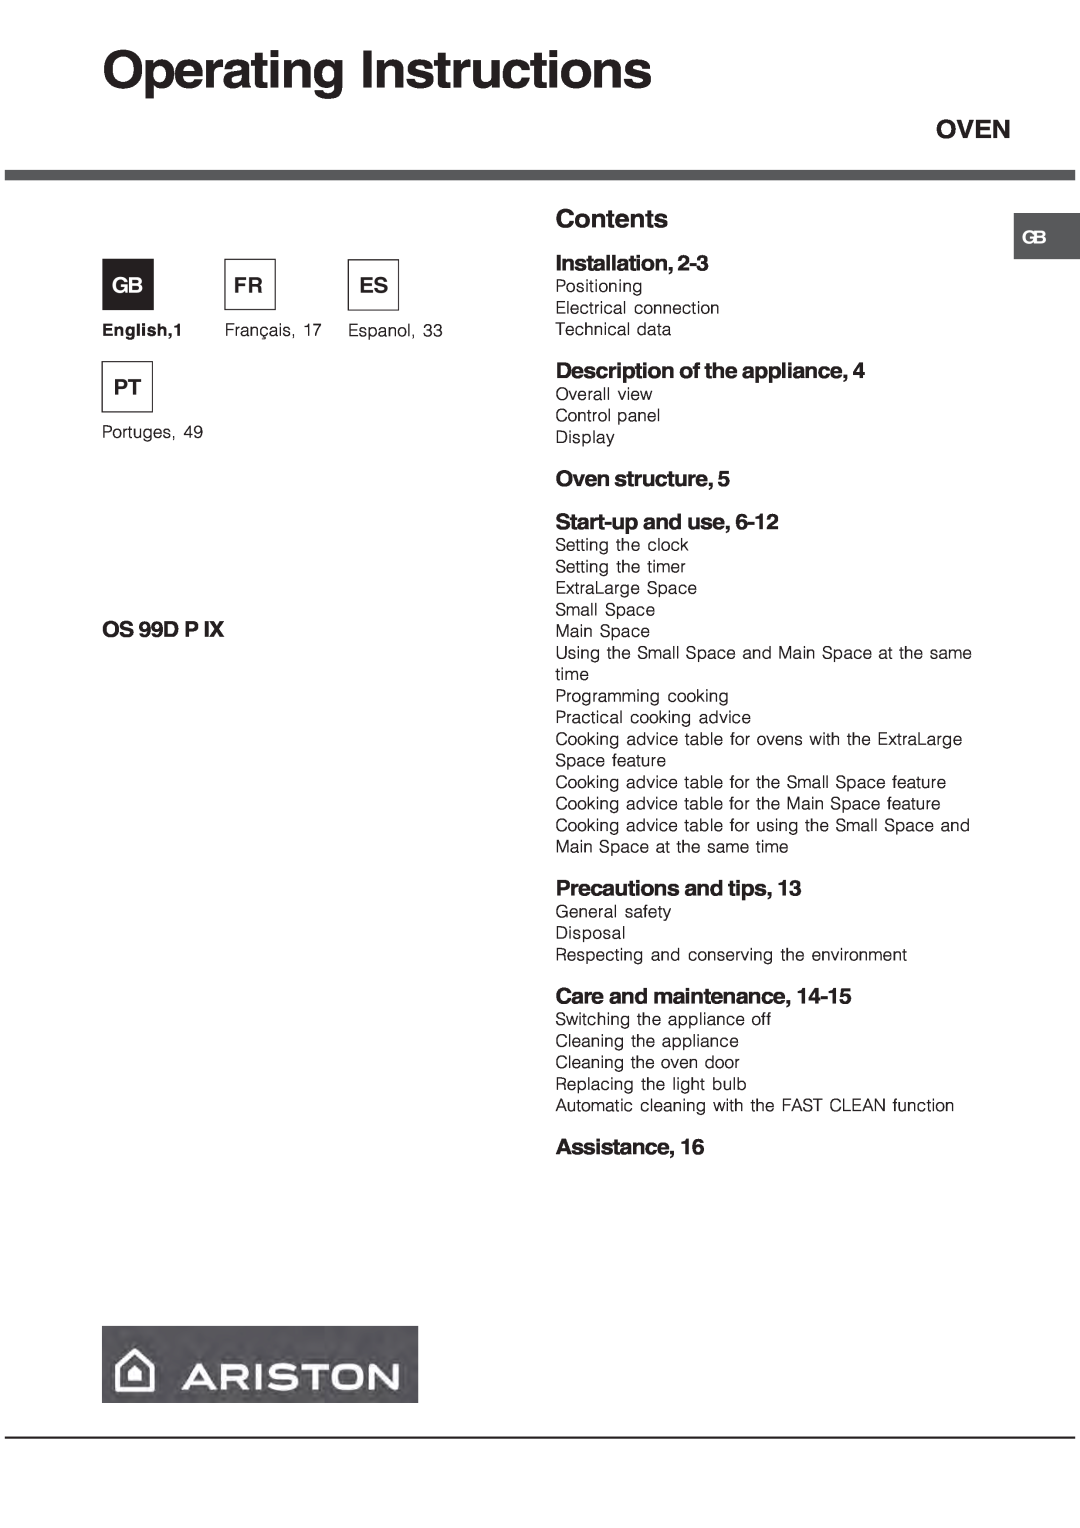 Ariston OS 99D P IX manual Operating Instructions, Oven, Contents 